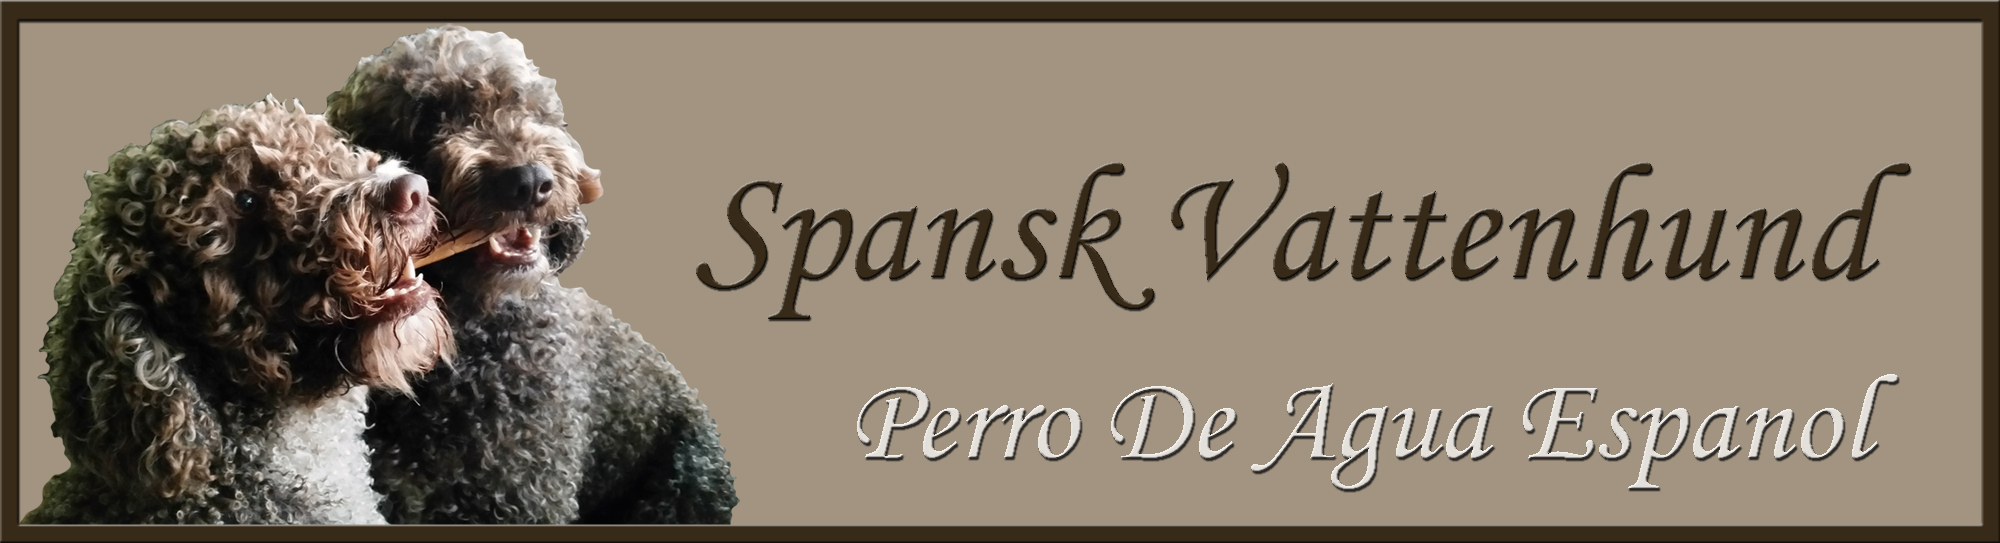 Spansk vattenhund. Perro De Agua Espanol